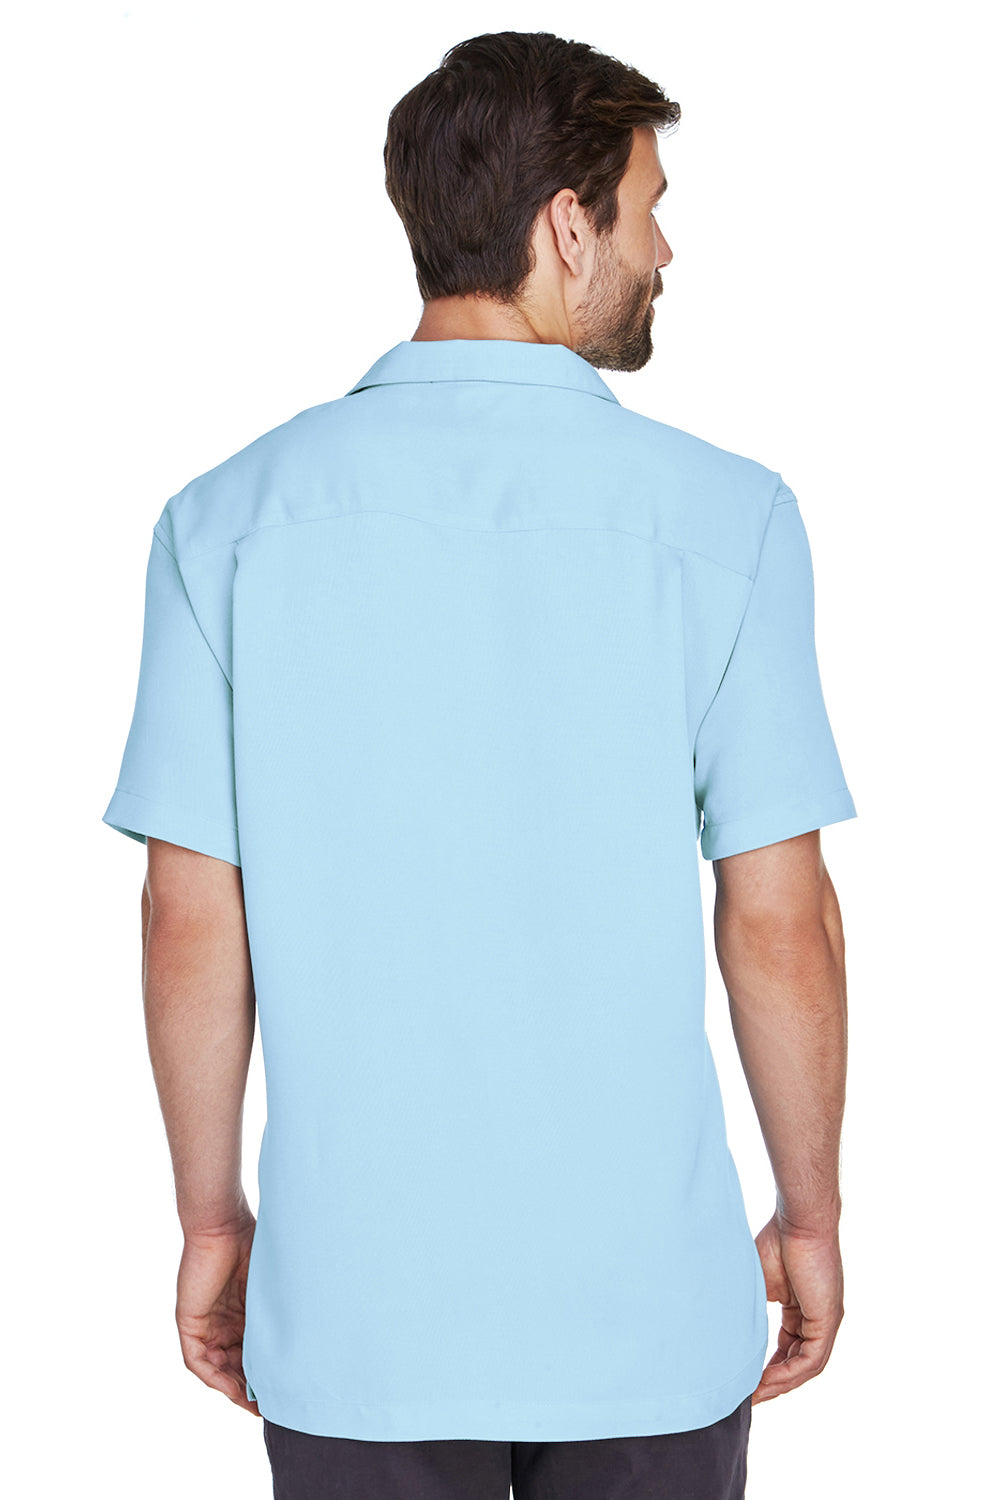 Harriton M570 Mens Bahama Wrinkle Resistant Short Sleeve Button Down Camp Shirt w/ Pocket Cloud Blue Back